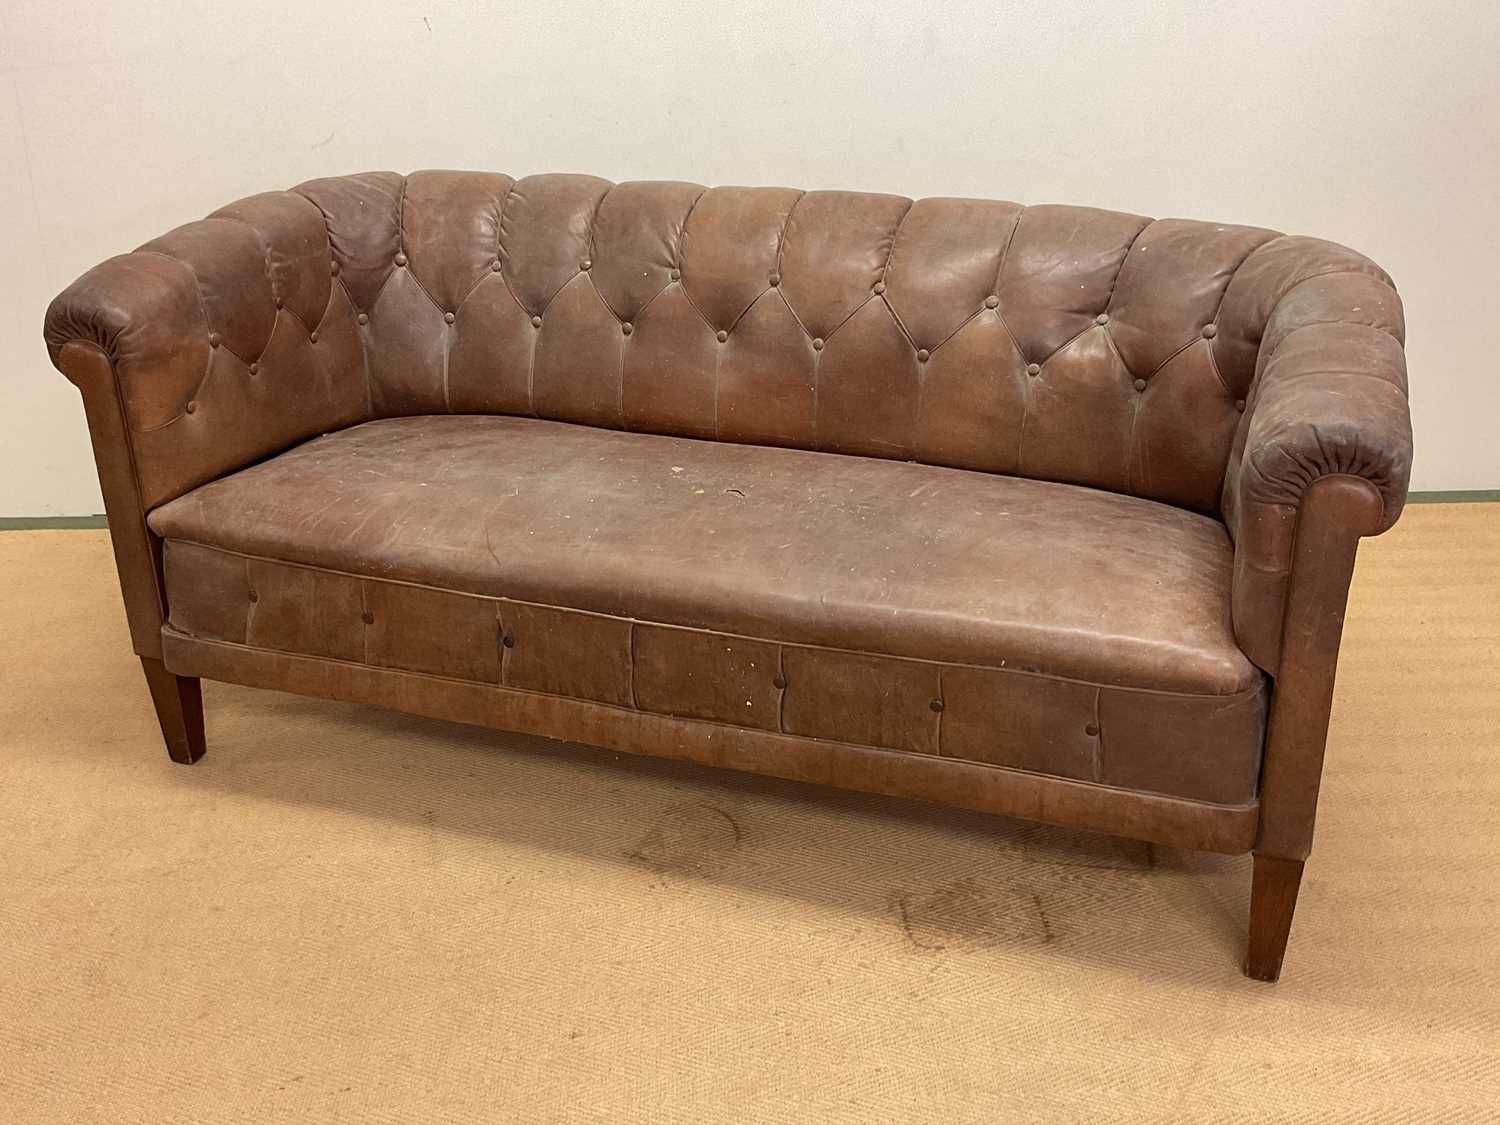 A 1930s Swedish buttonback leather sofa, height 74cm, width 165cm, depth 75cm.